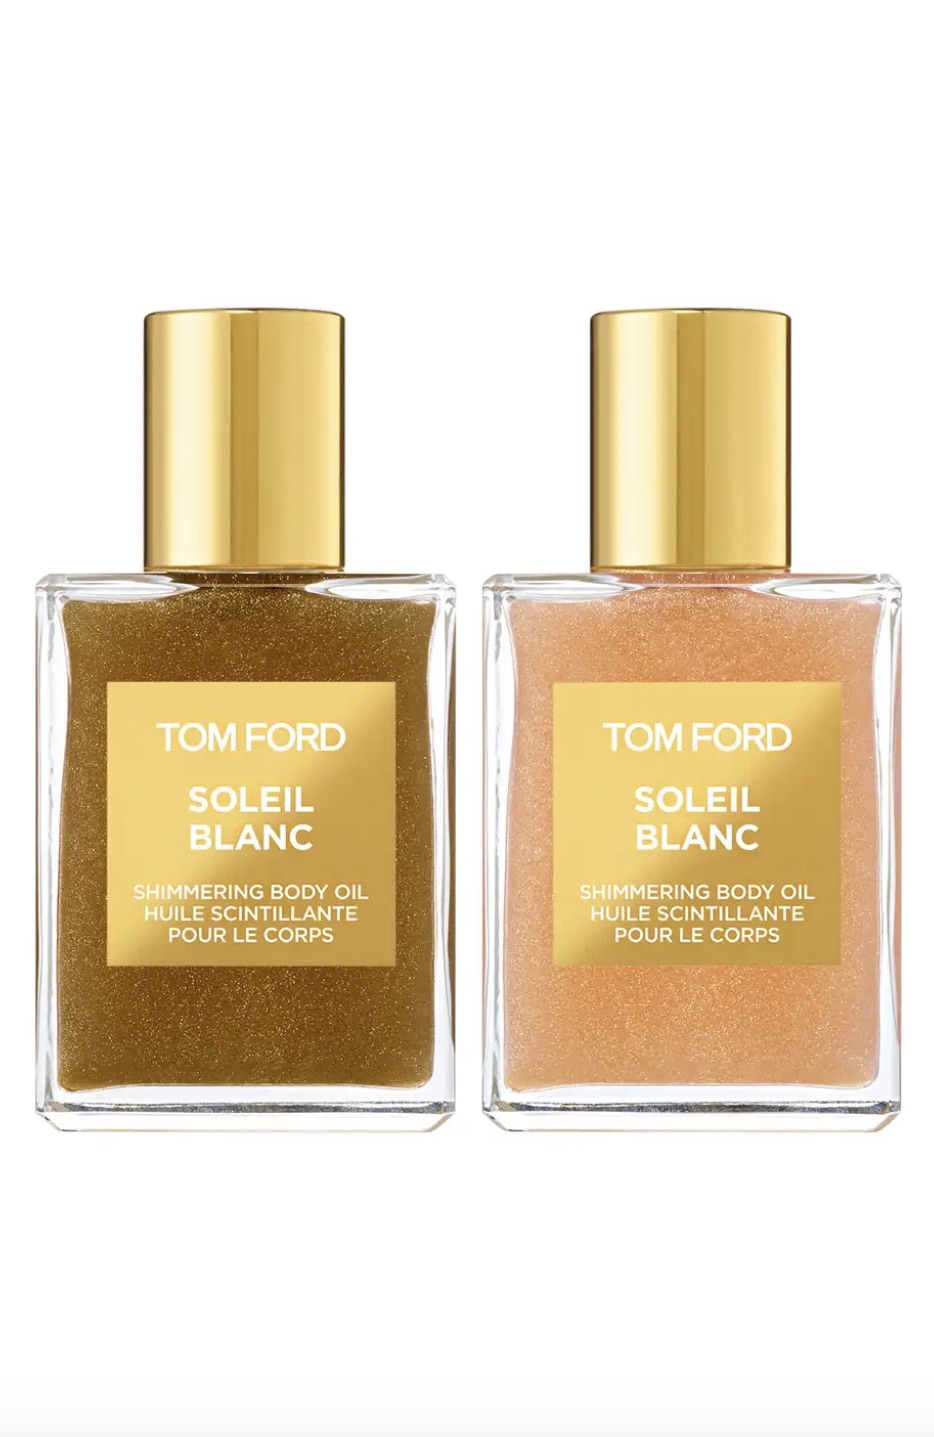 Tom Ford Soleil Blanc Shimmering Body Oil Set